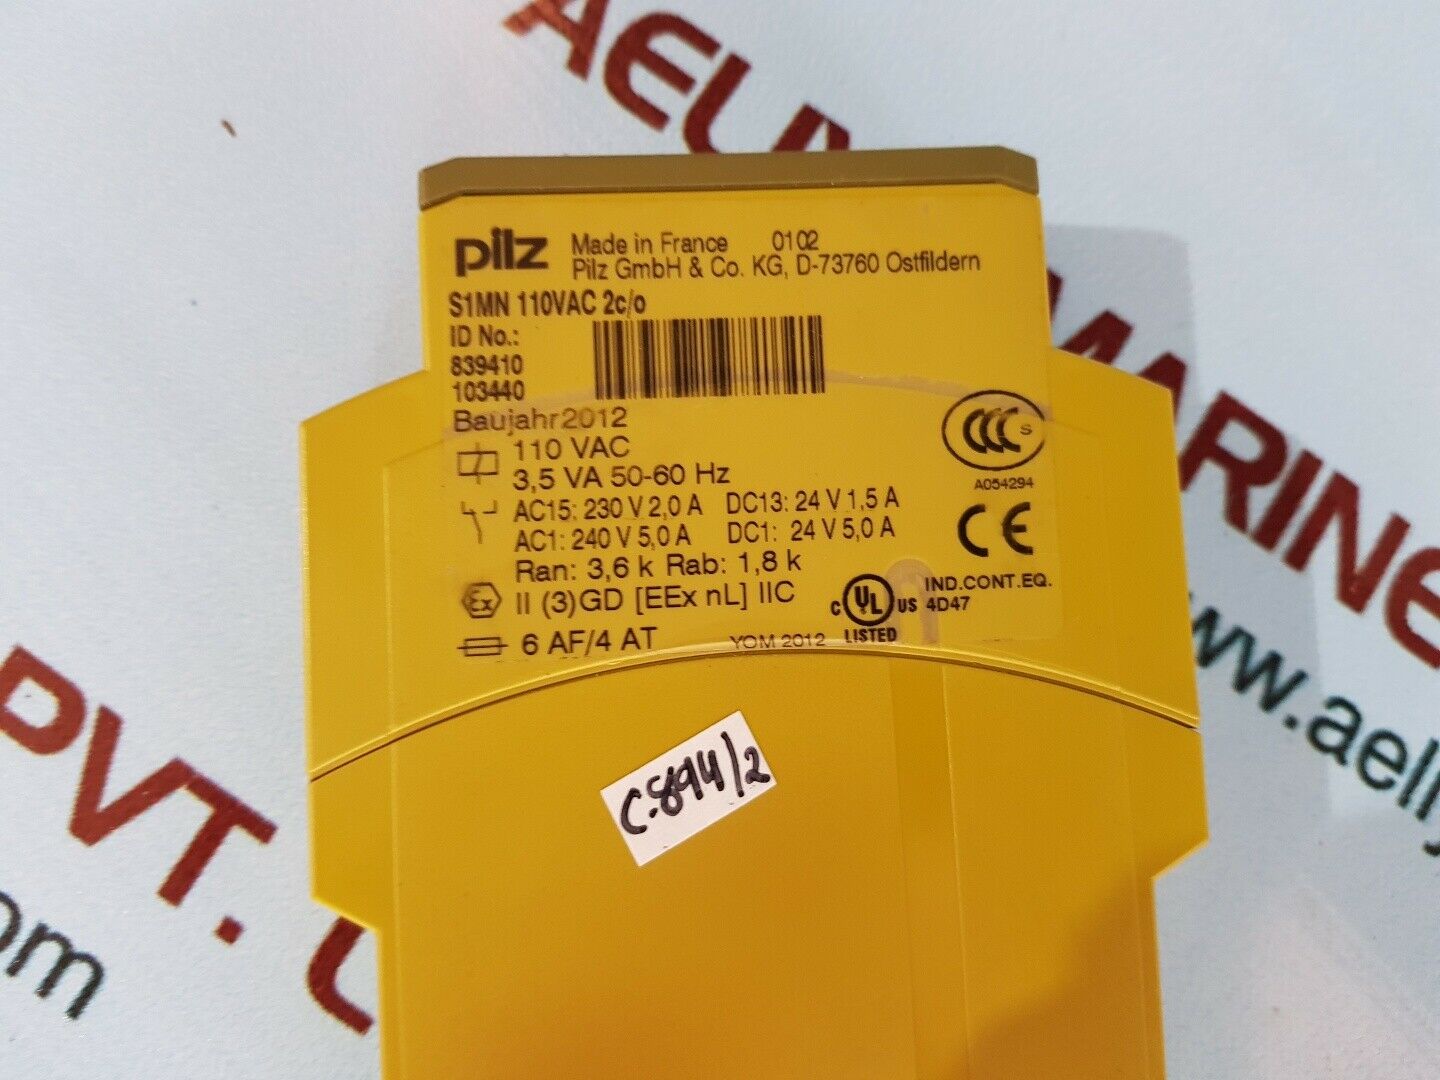 Pilz S1Mn 110Vac 2C/O Electronic Protection Relay 24V Ac/Dc
